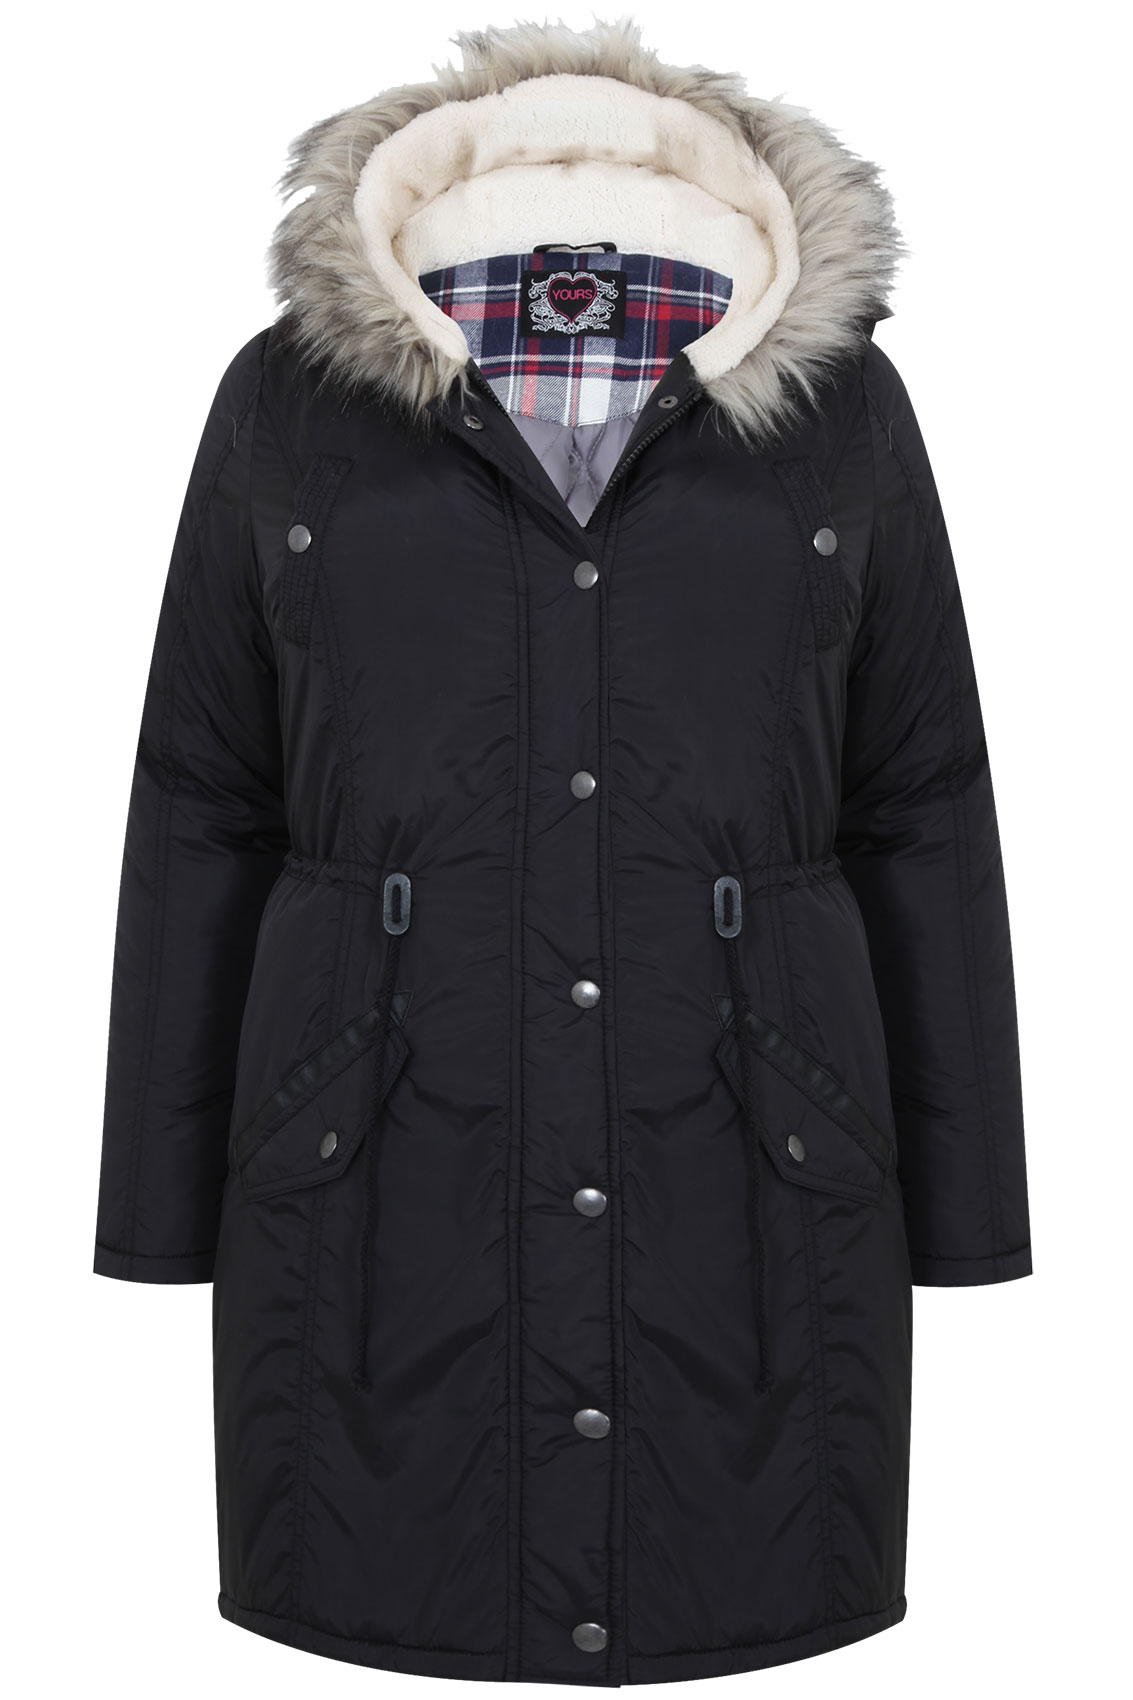 Black Fishtail Parka Coat With Fur Hood Plus Size 16 to 36